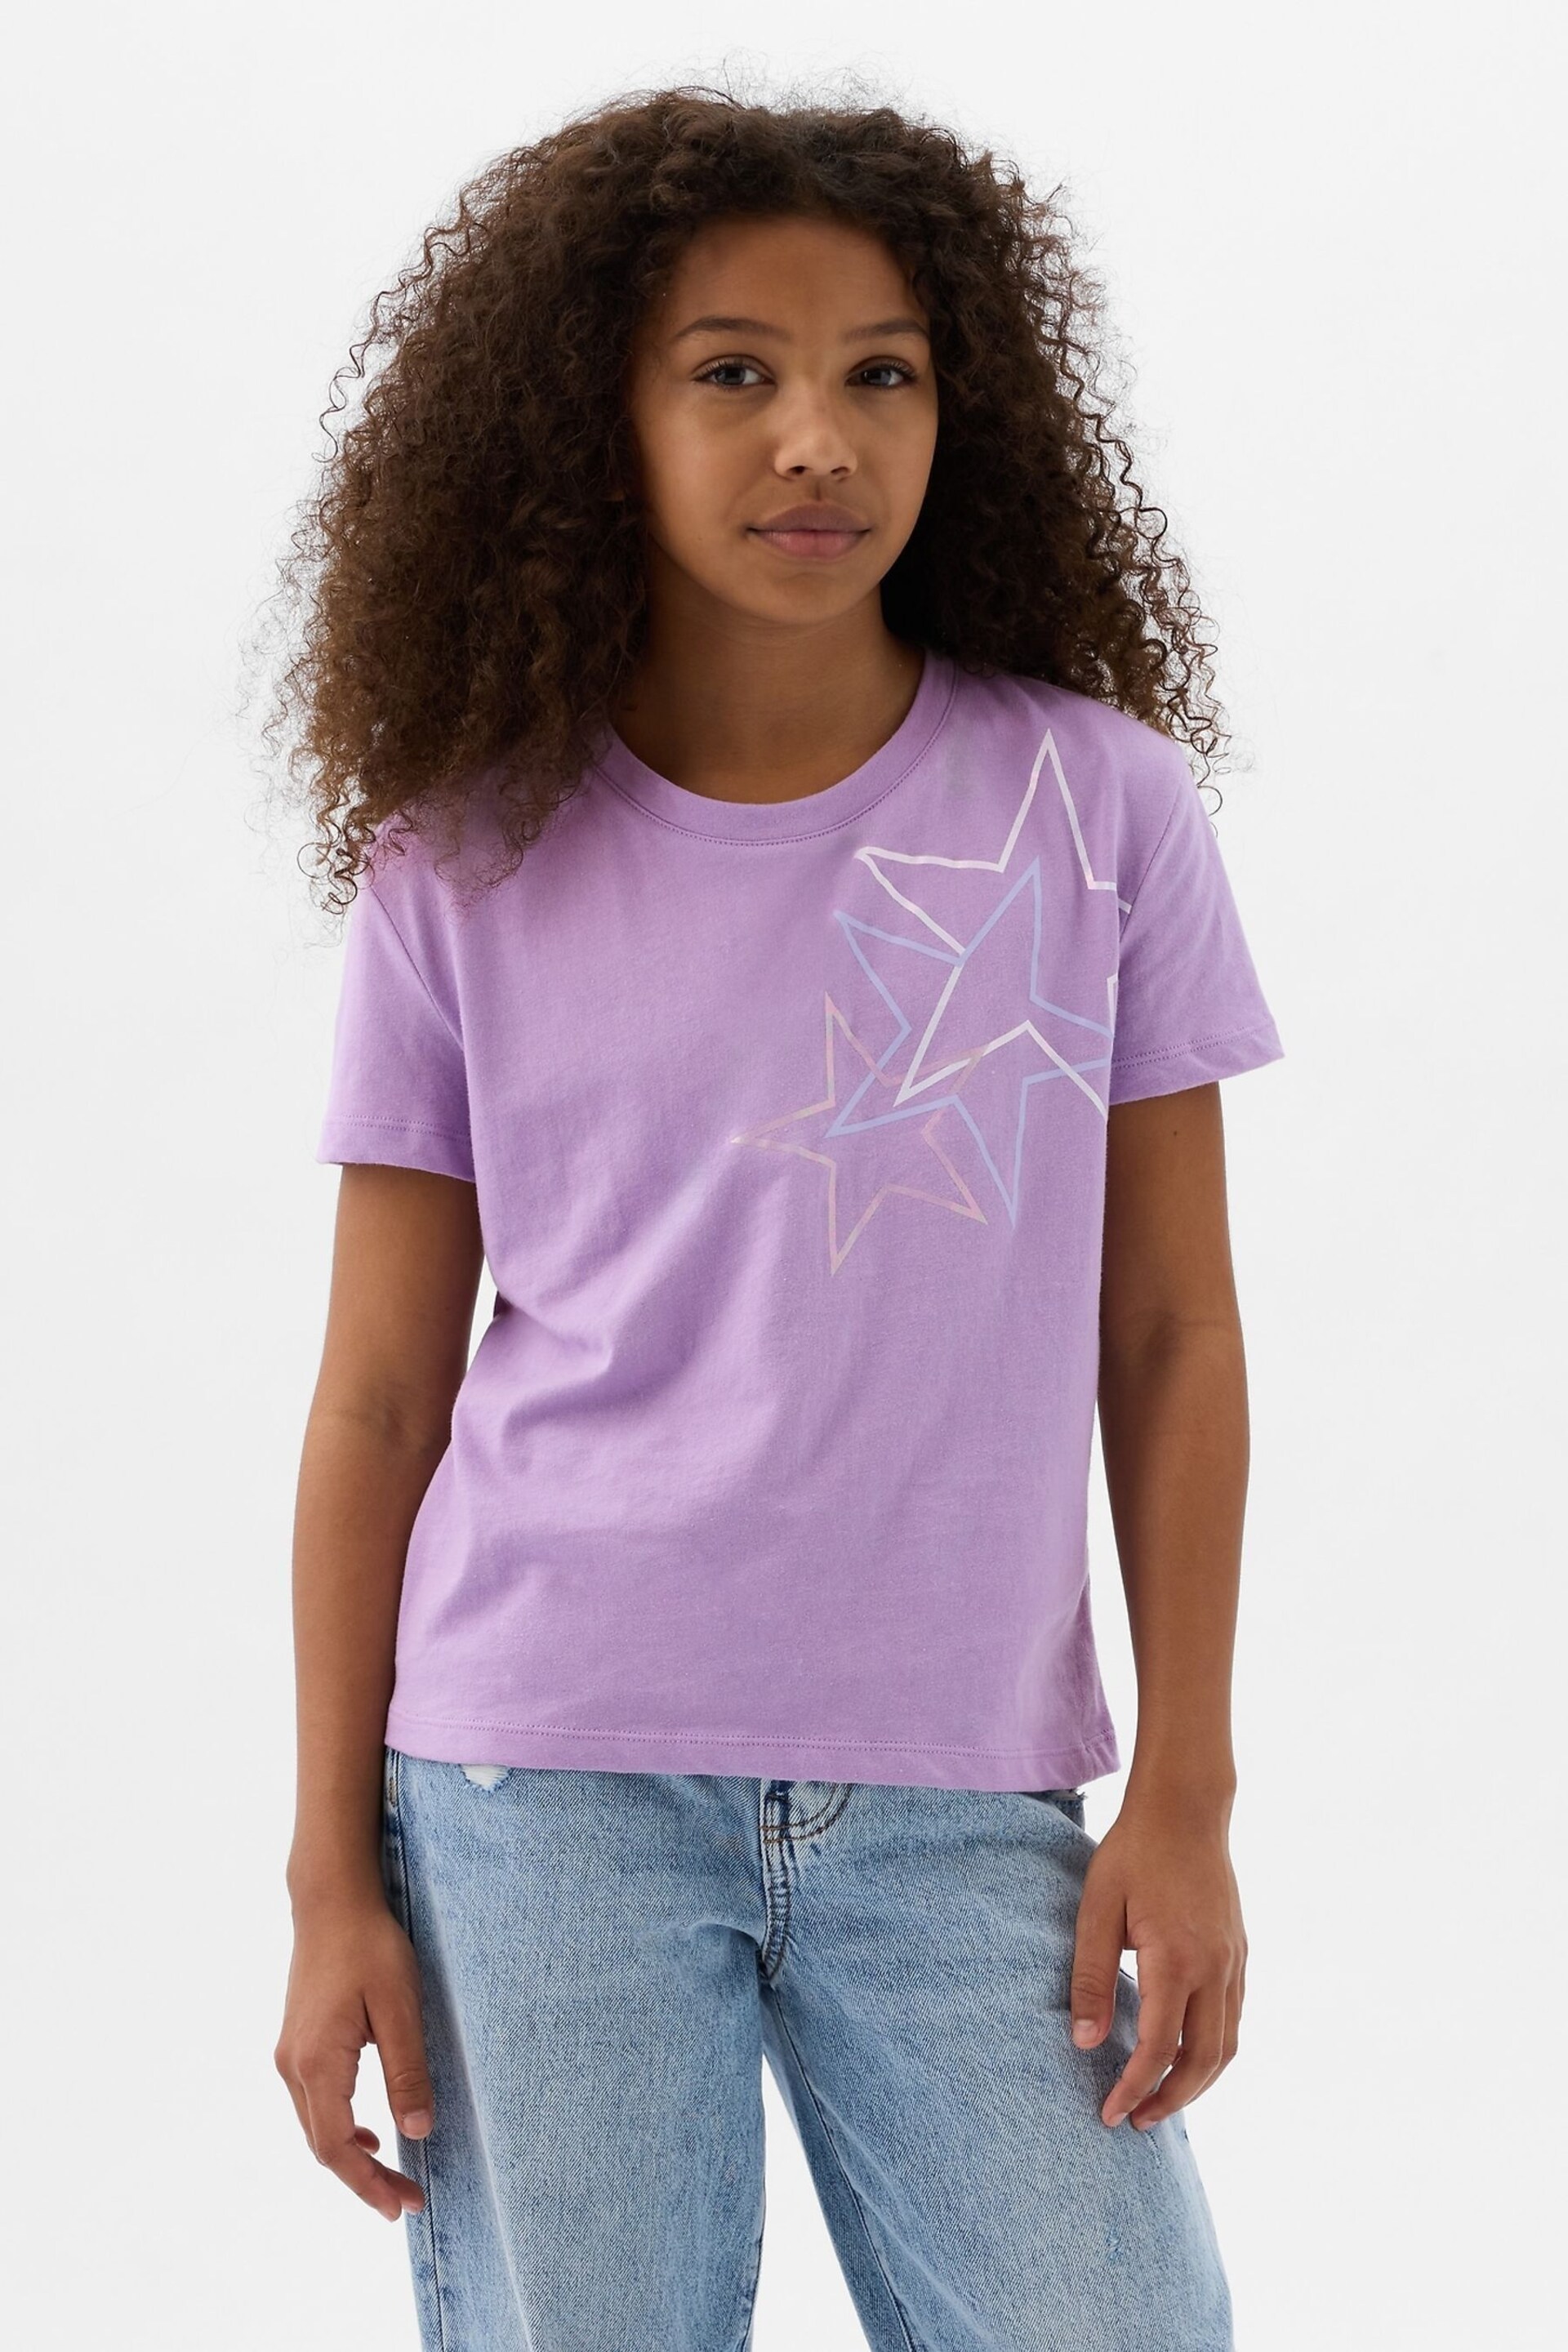 Gap Purple Star Graphic Short Sleeve Crew Neck T-Shirt (4-13yrs) - Image 1 of 3